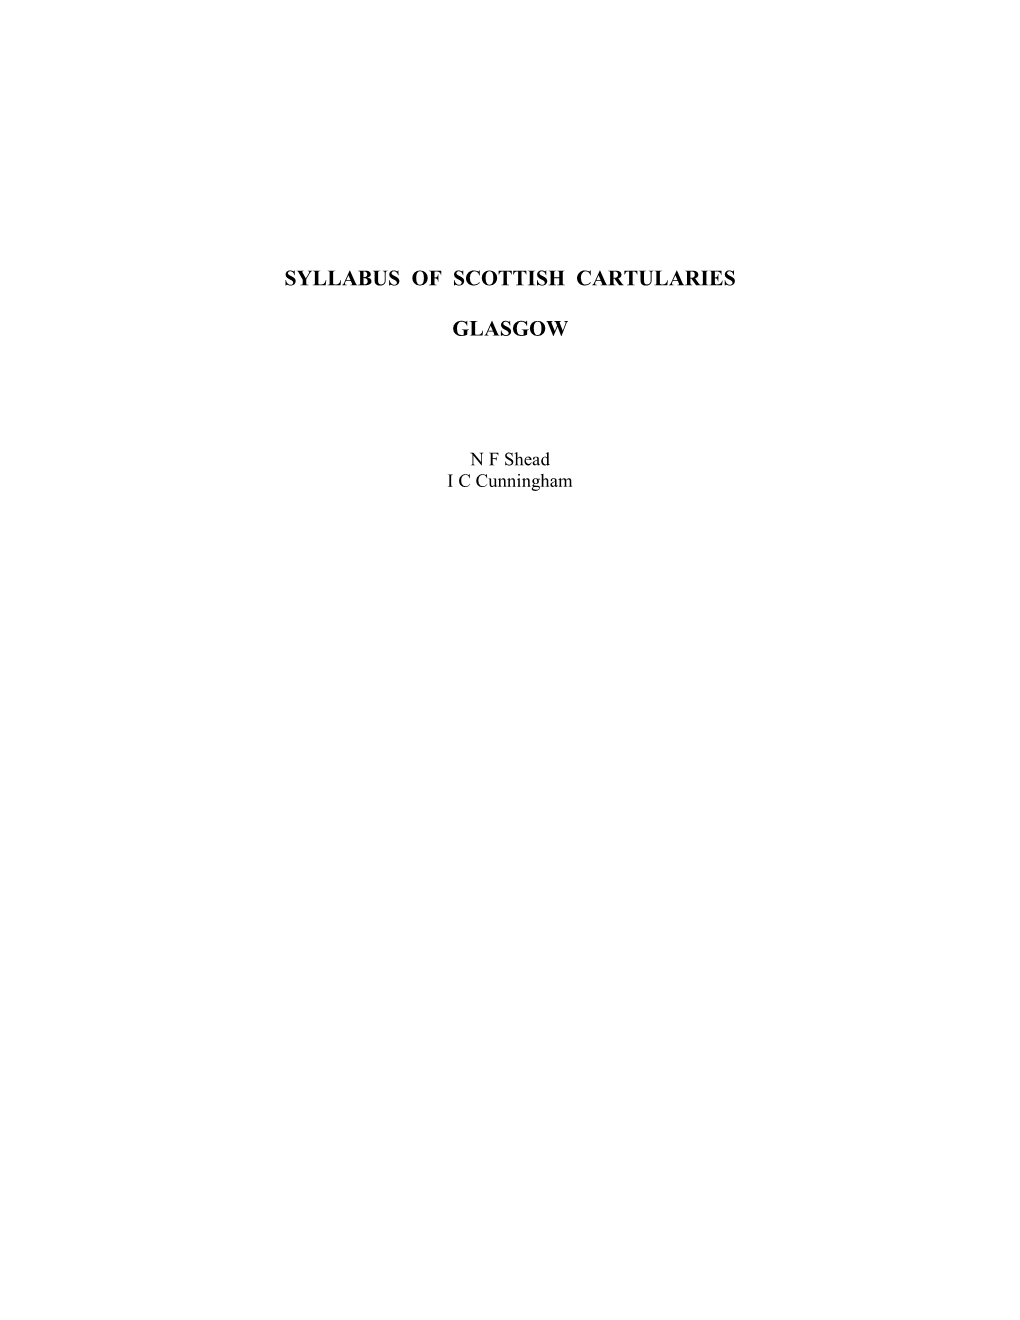 Syllabus of Scottish Cartularies